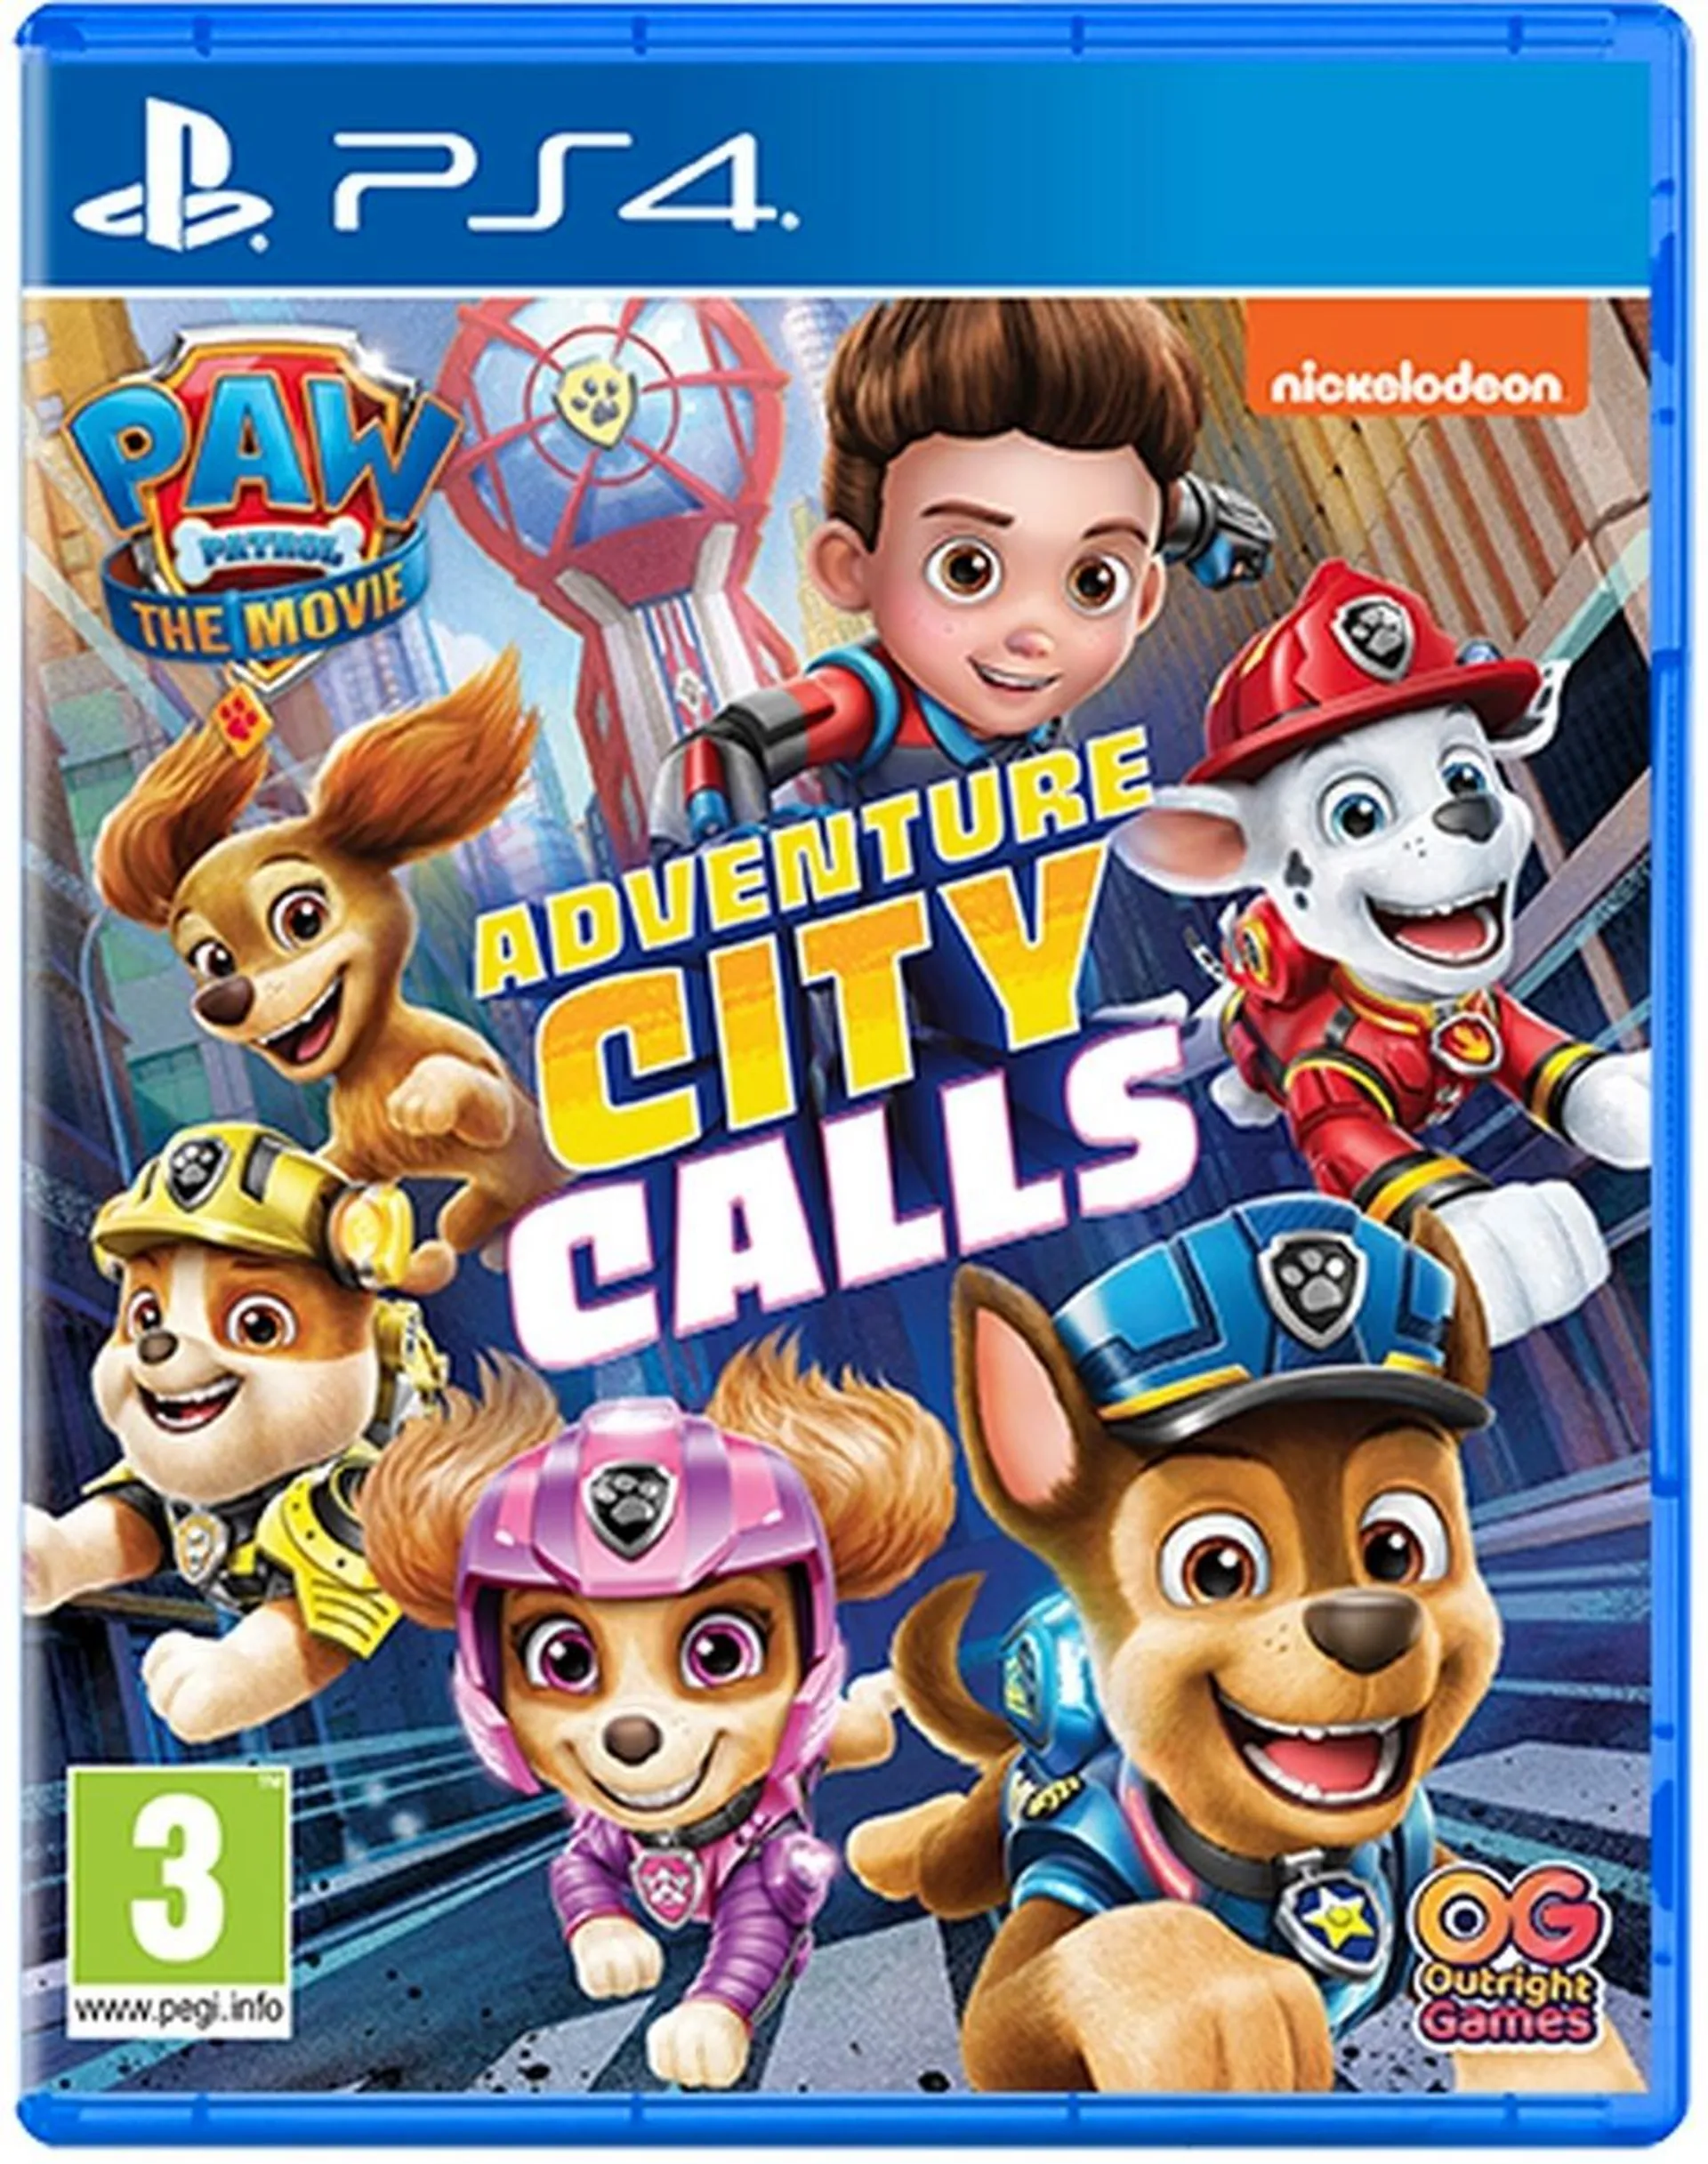 PlayStation 4 Paw Patrol: Adventure City Calls